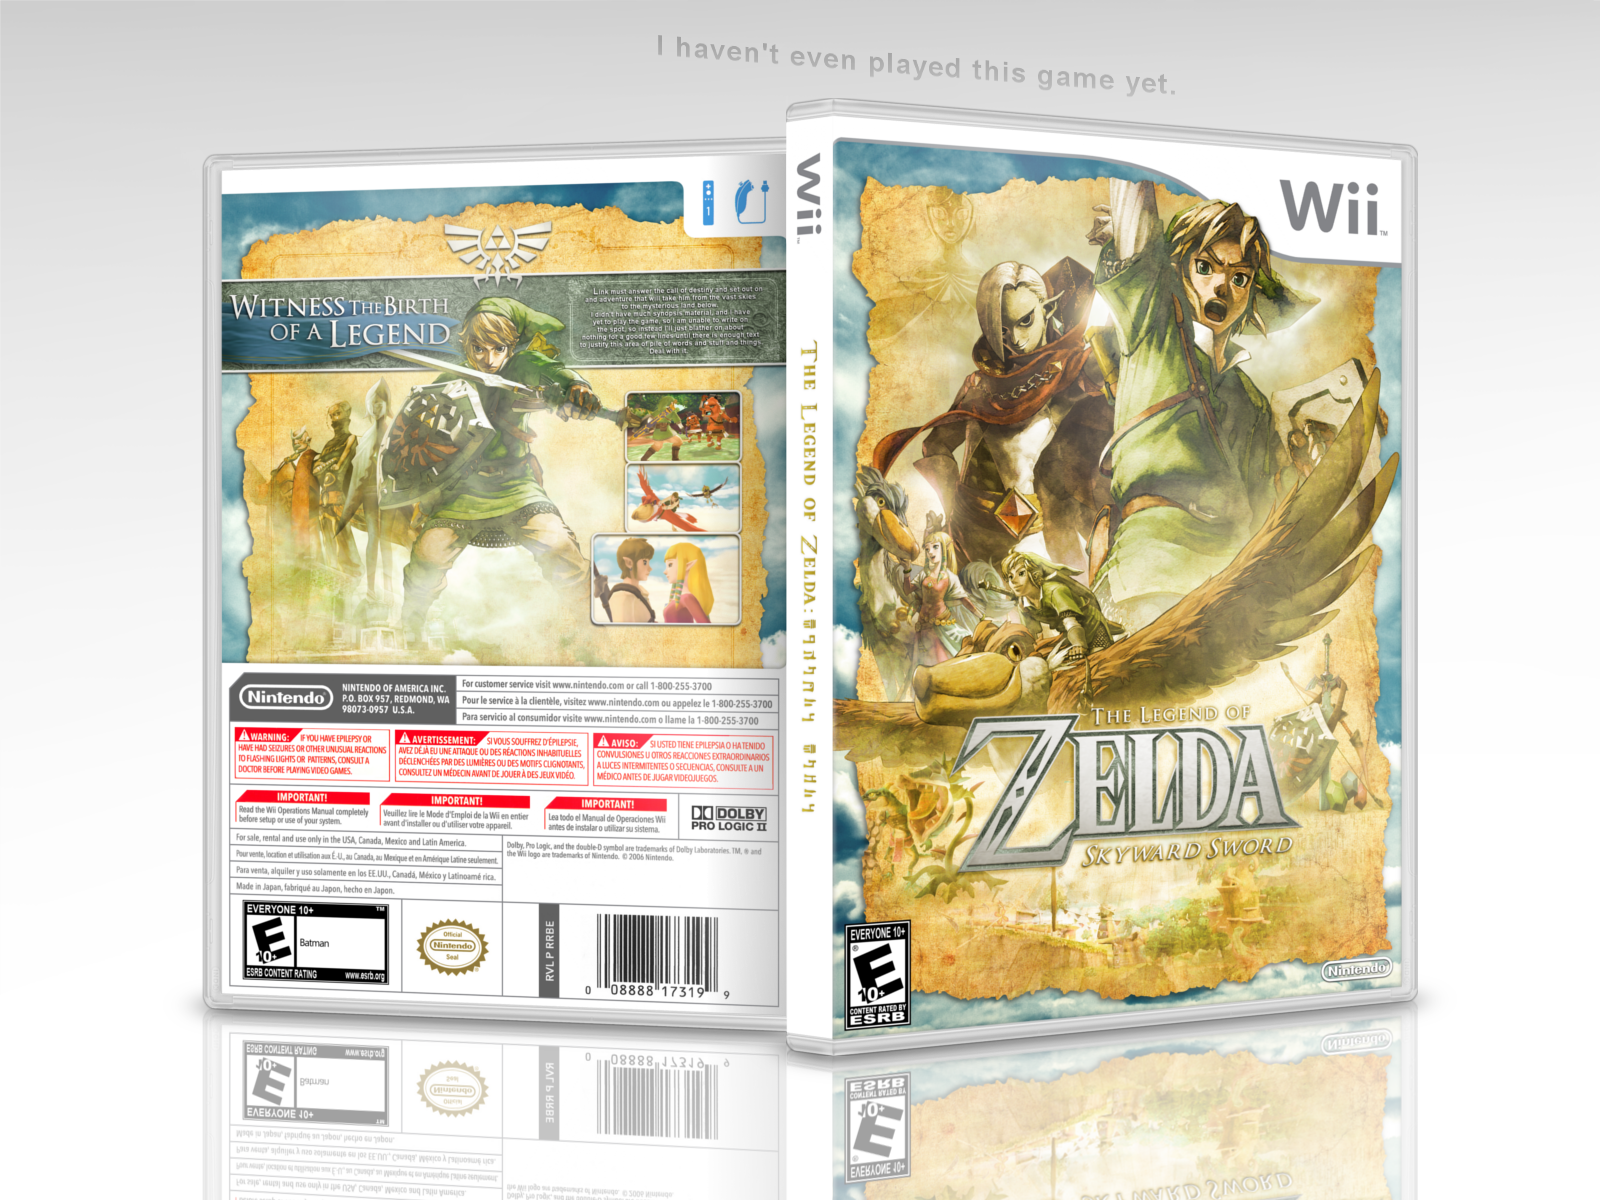 The Legend of Zelda: Skyward Sword box cover